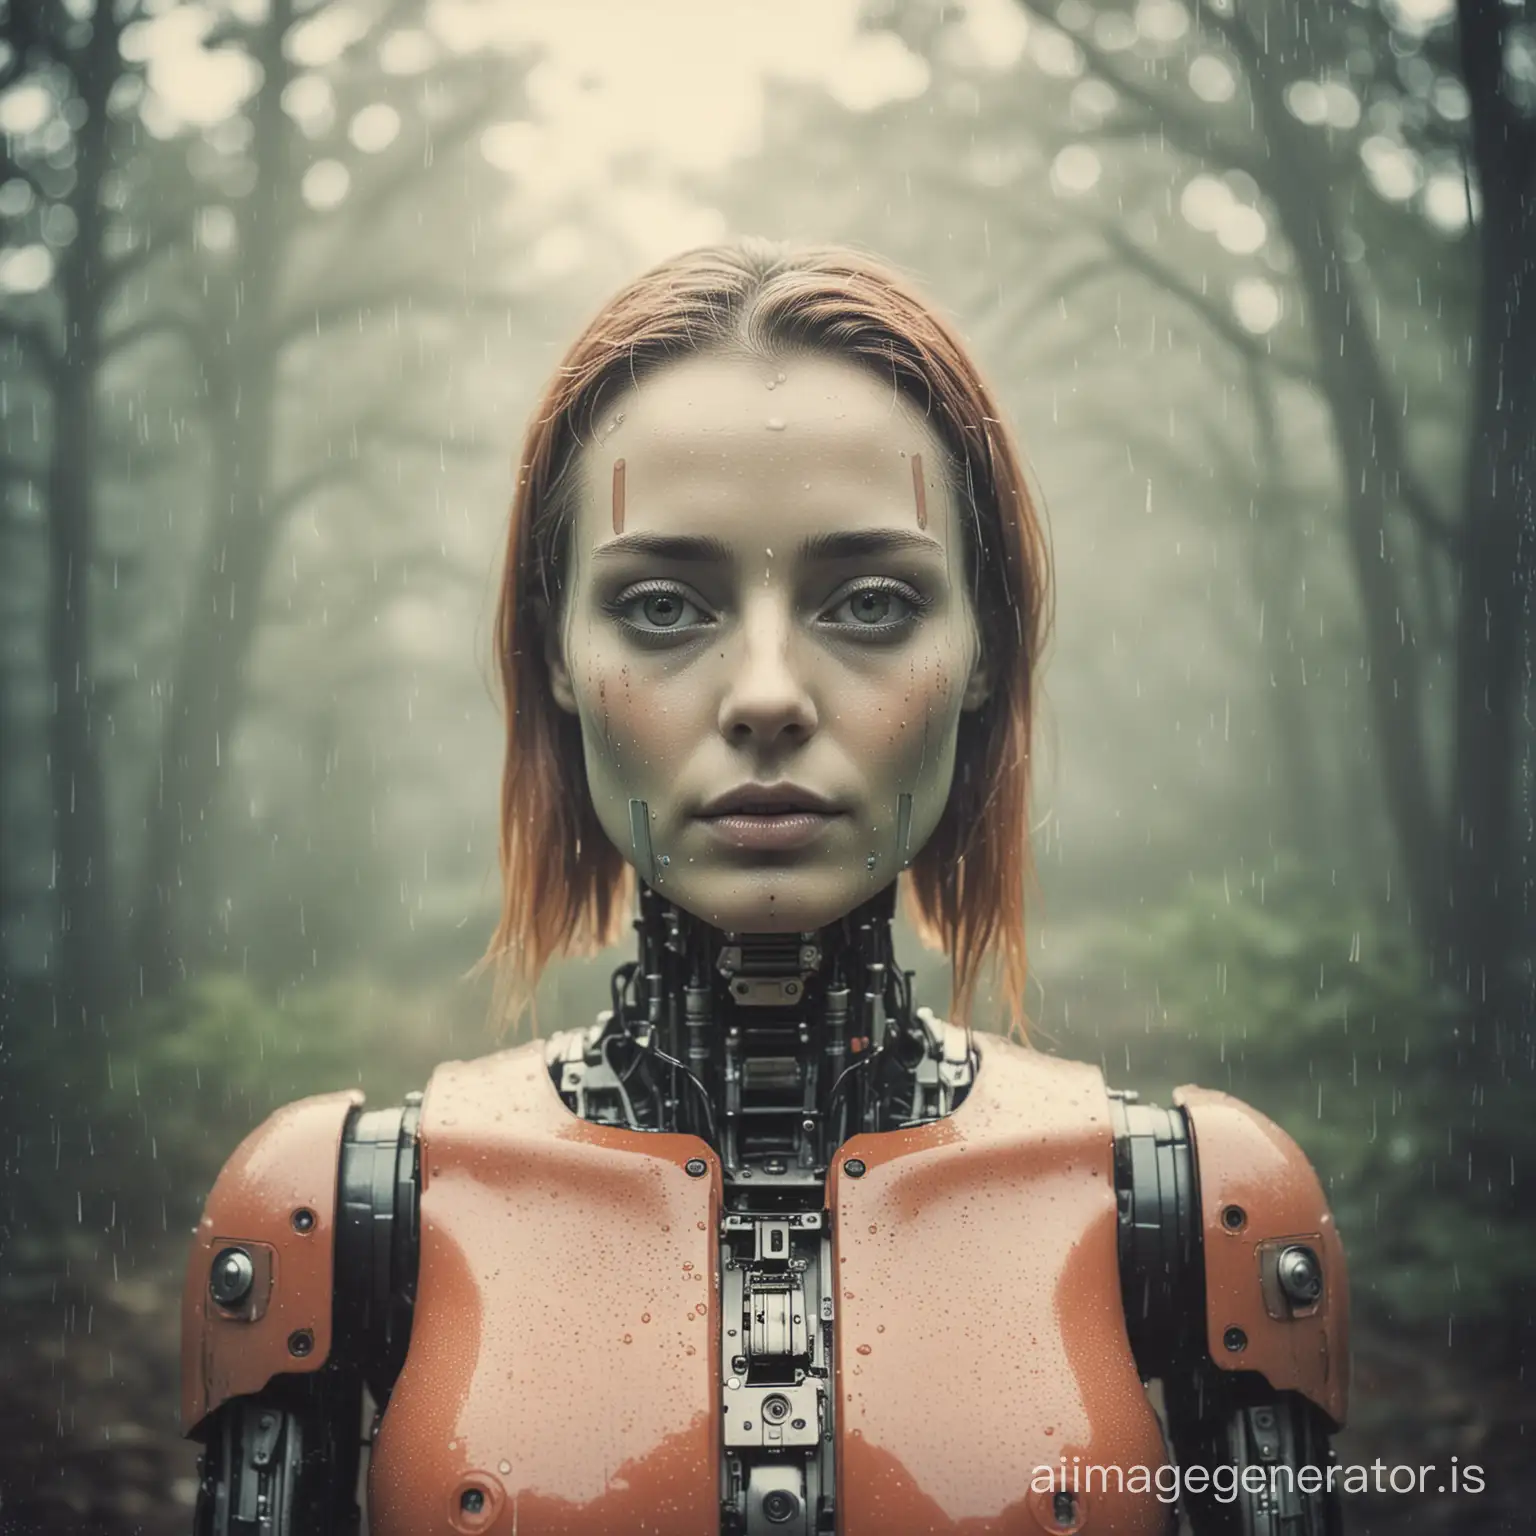 Vintage-Analog-Polaroid-Portrait-of-a-Feminine-Robot-in-Misty-Rain